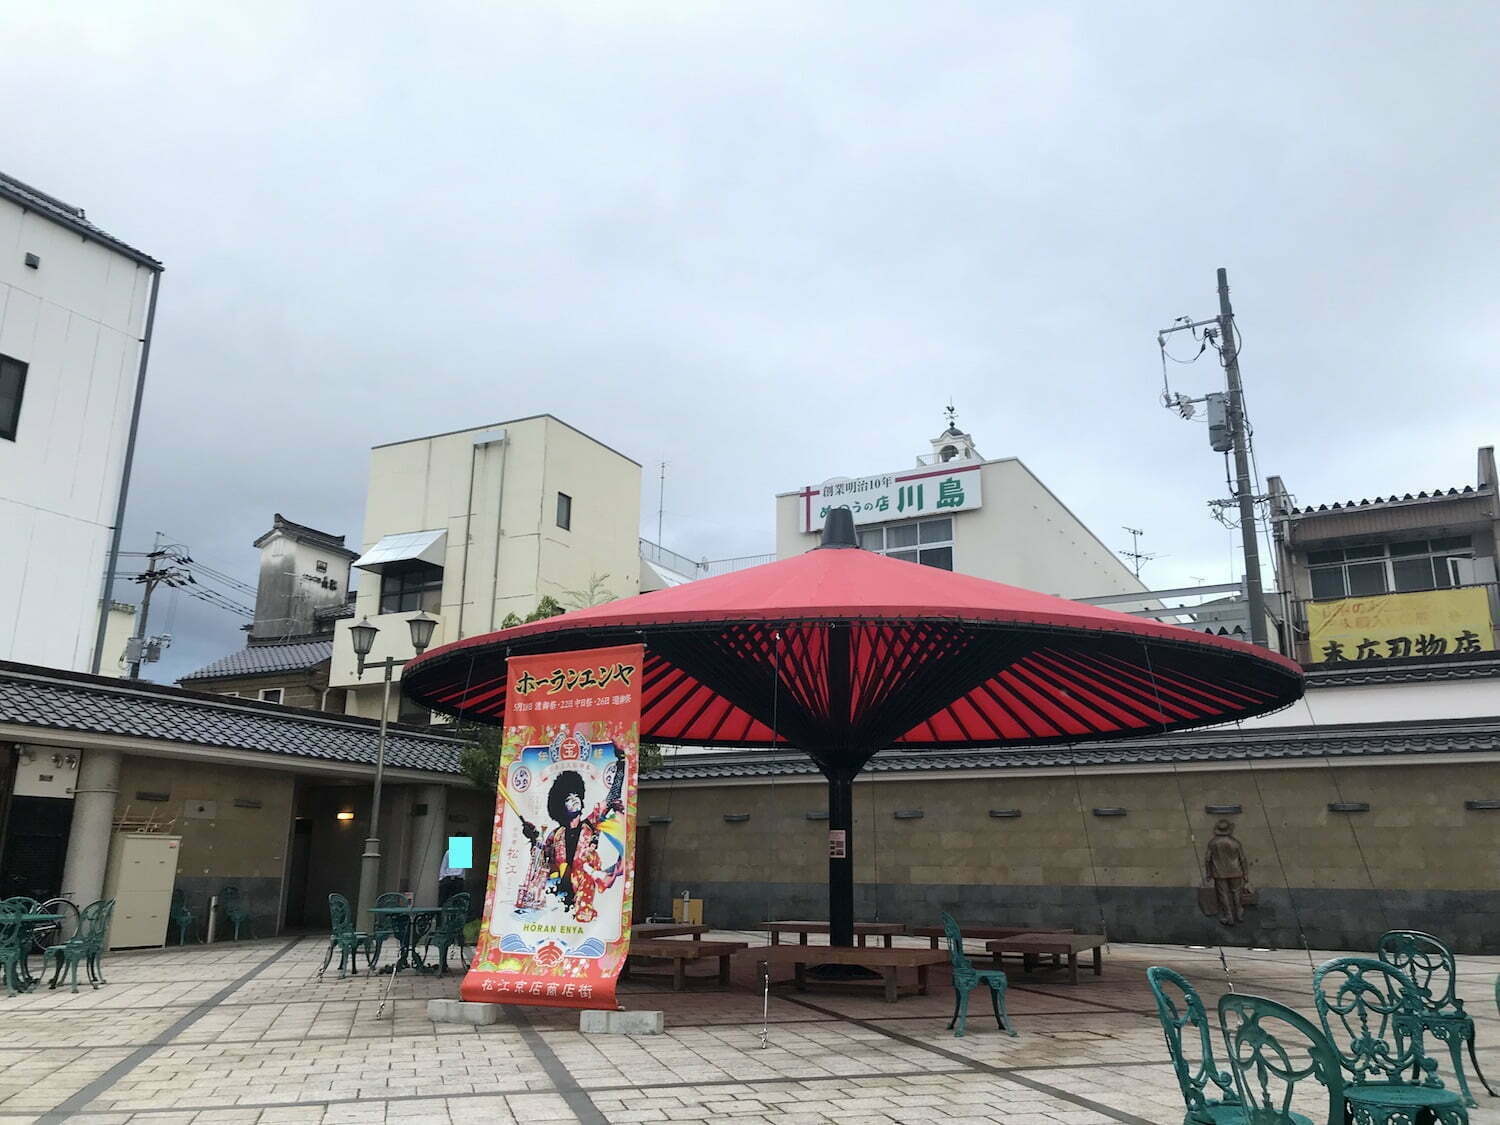 Huge Red Umbrella